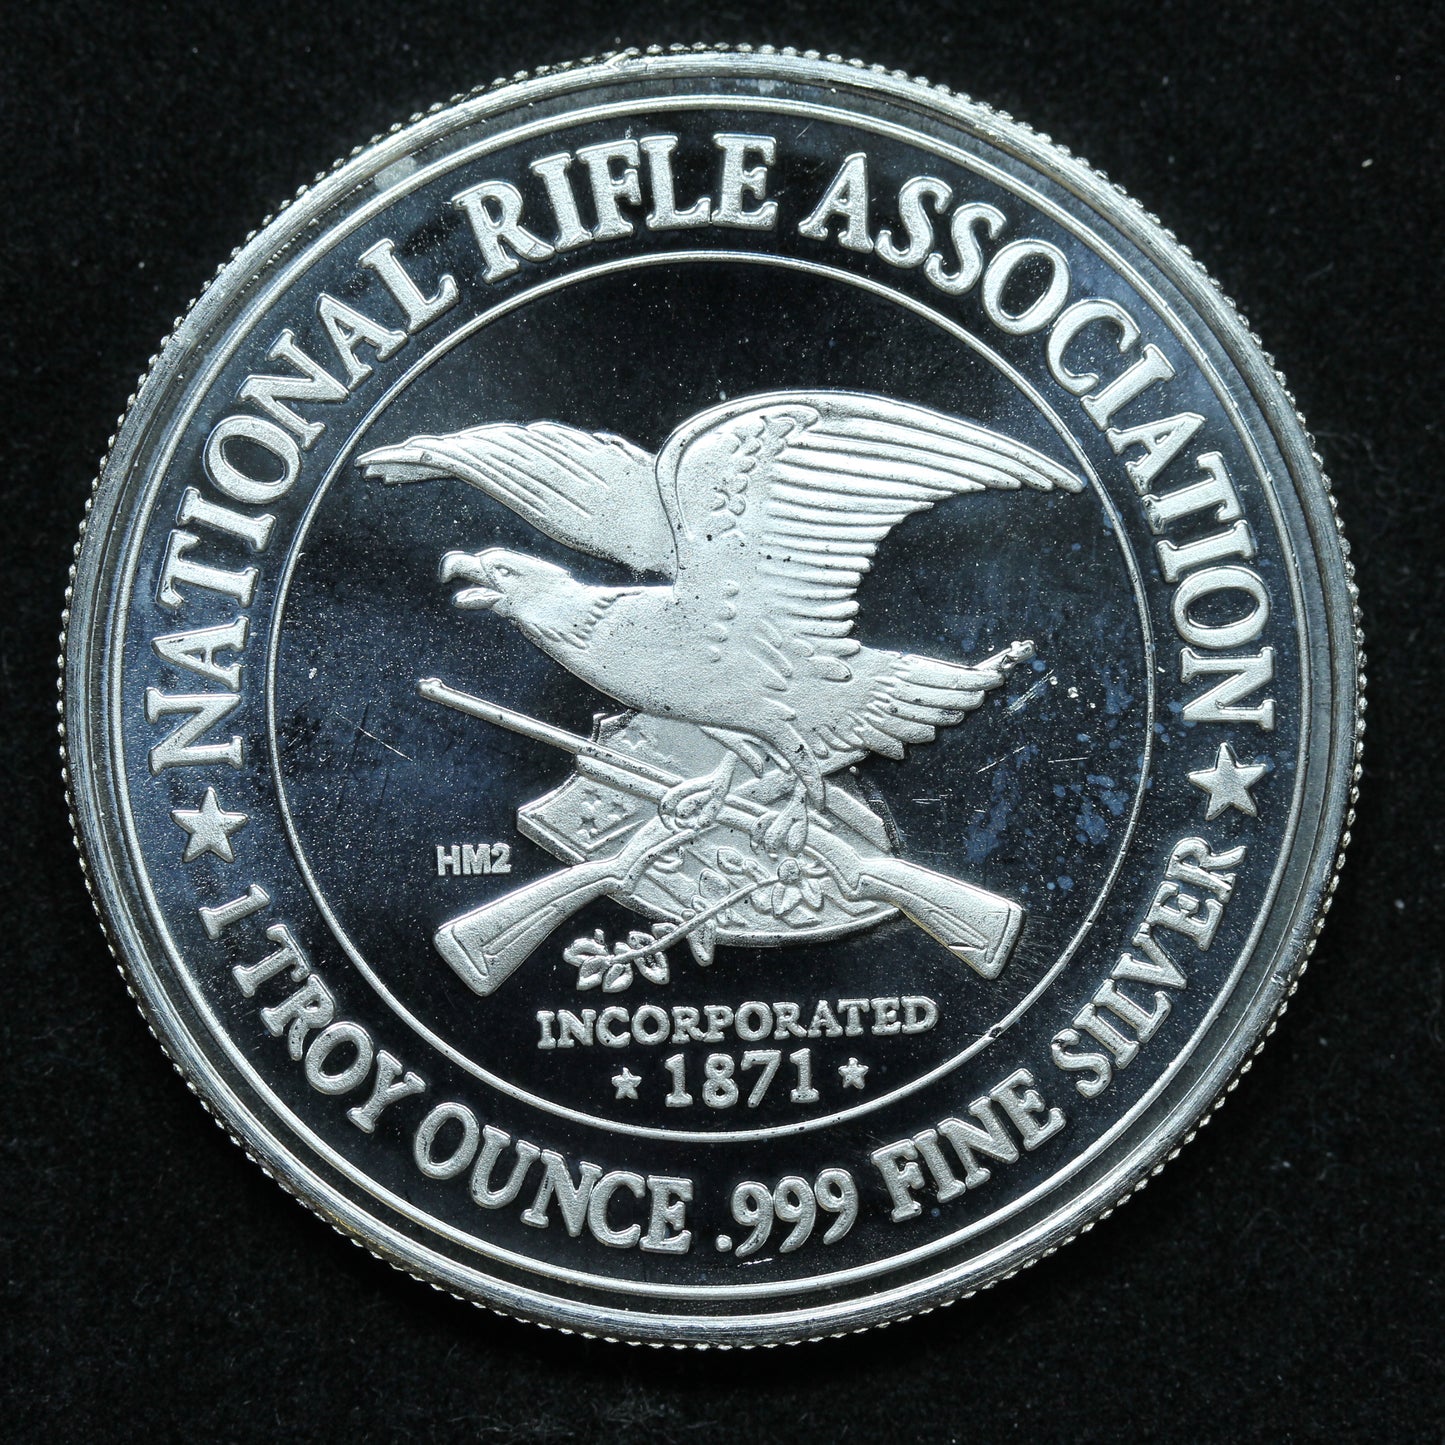 2019 1 oz Silver Round - National Rifle Association Mallard - Highland Mint